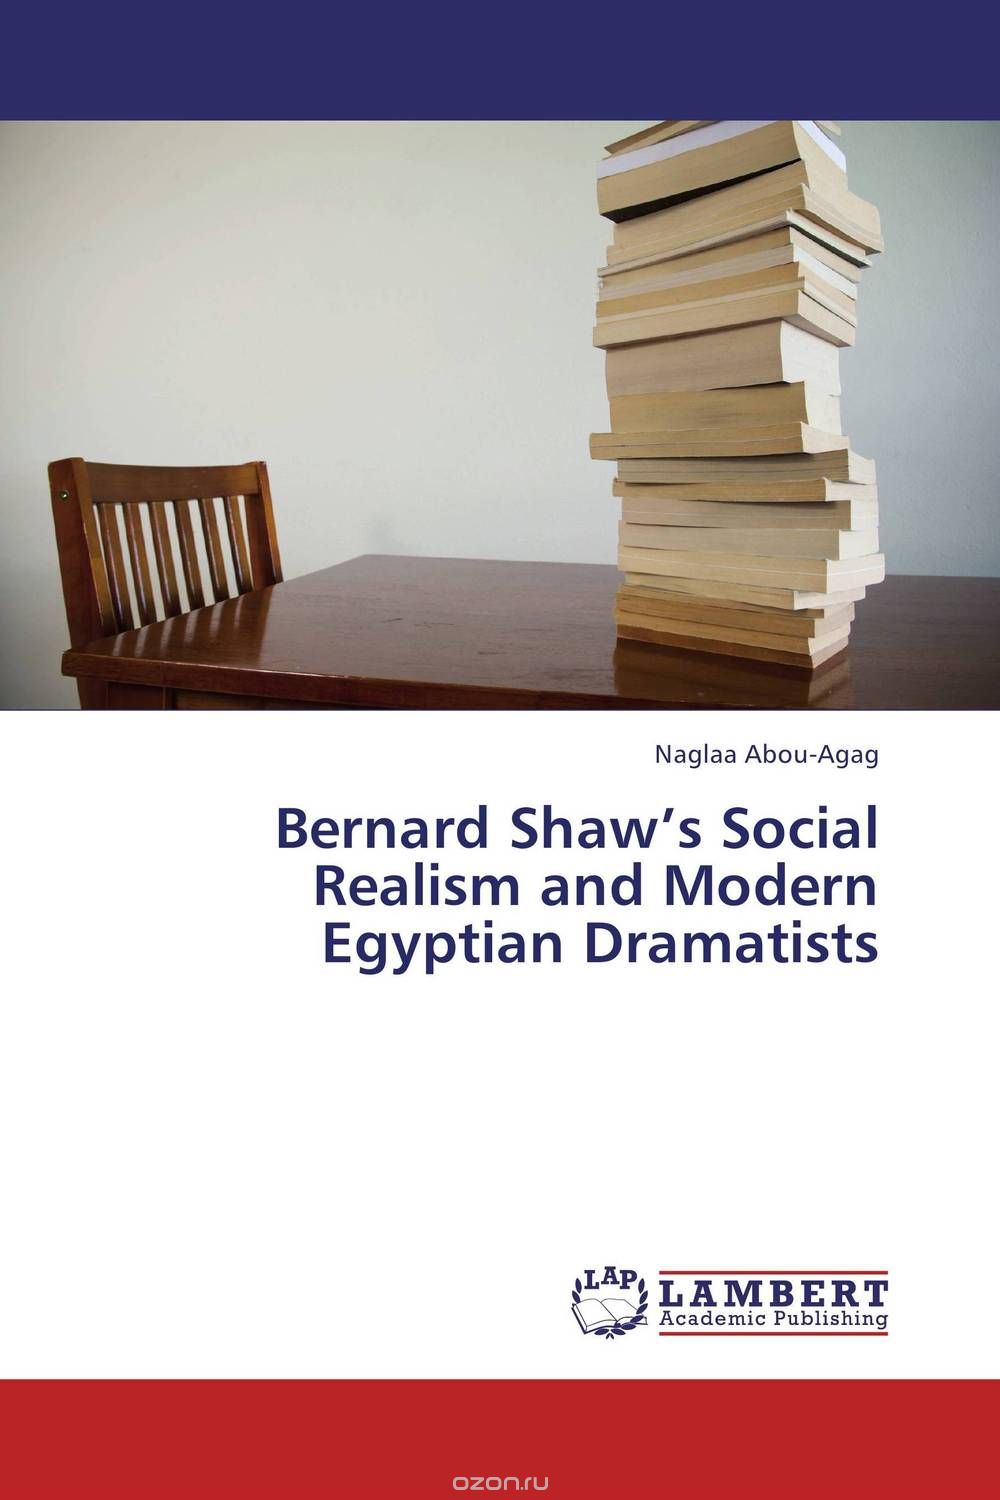 Скачать книгу "Bernard Shaw’s Social Realism and Modern Egyptian Dramatists"